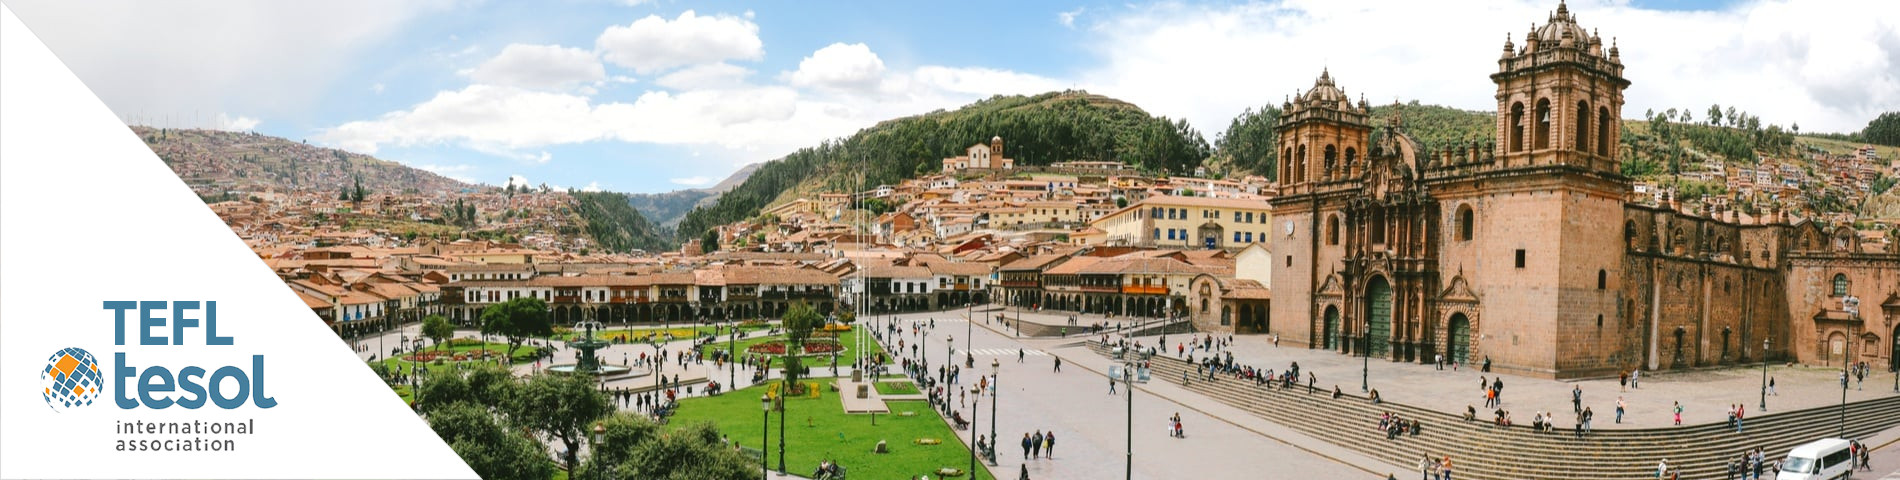 Cuzco - TEFL / TESOL 